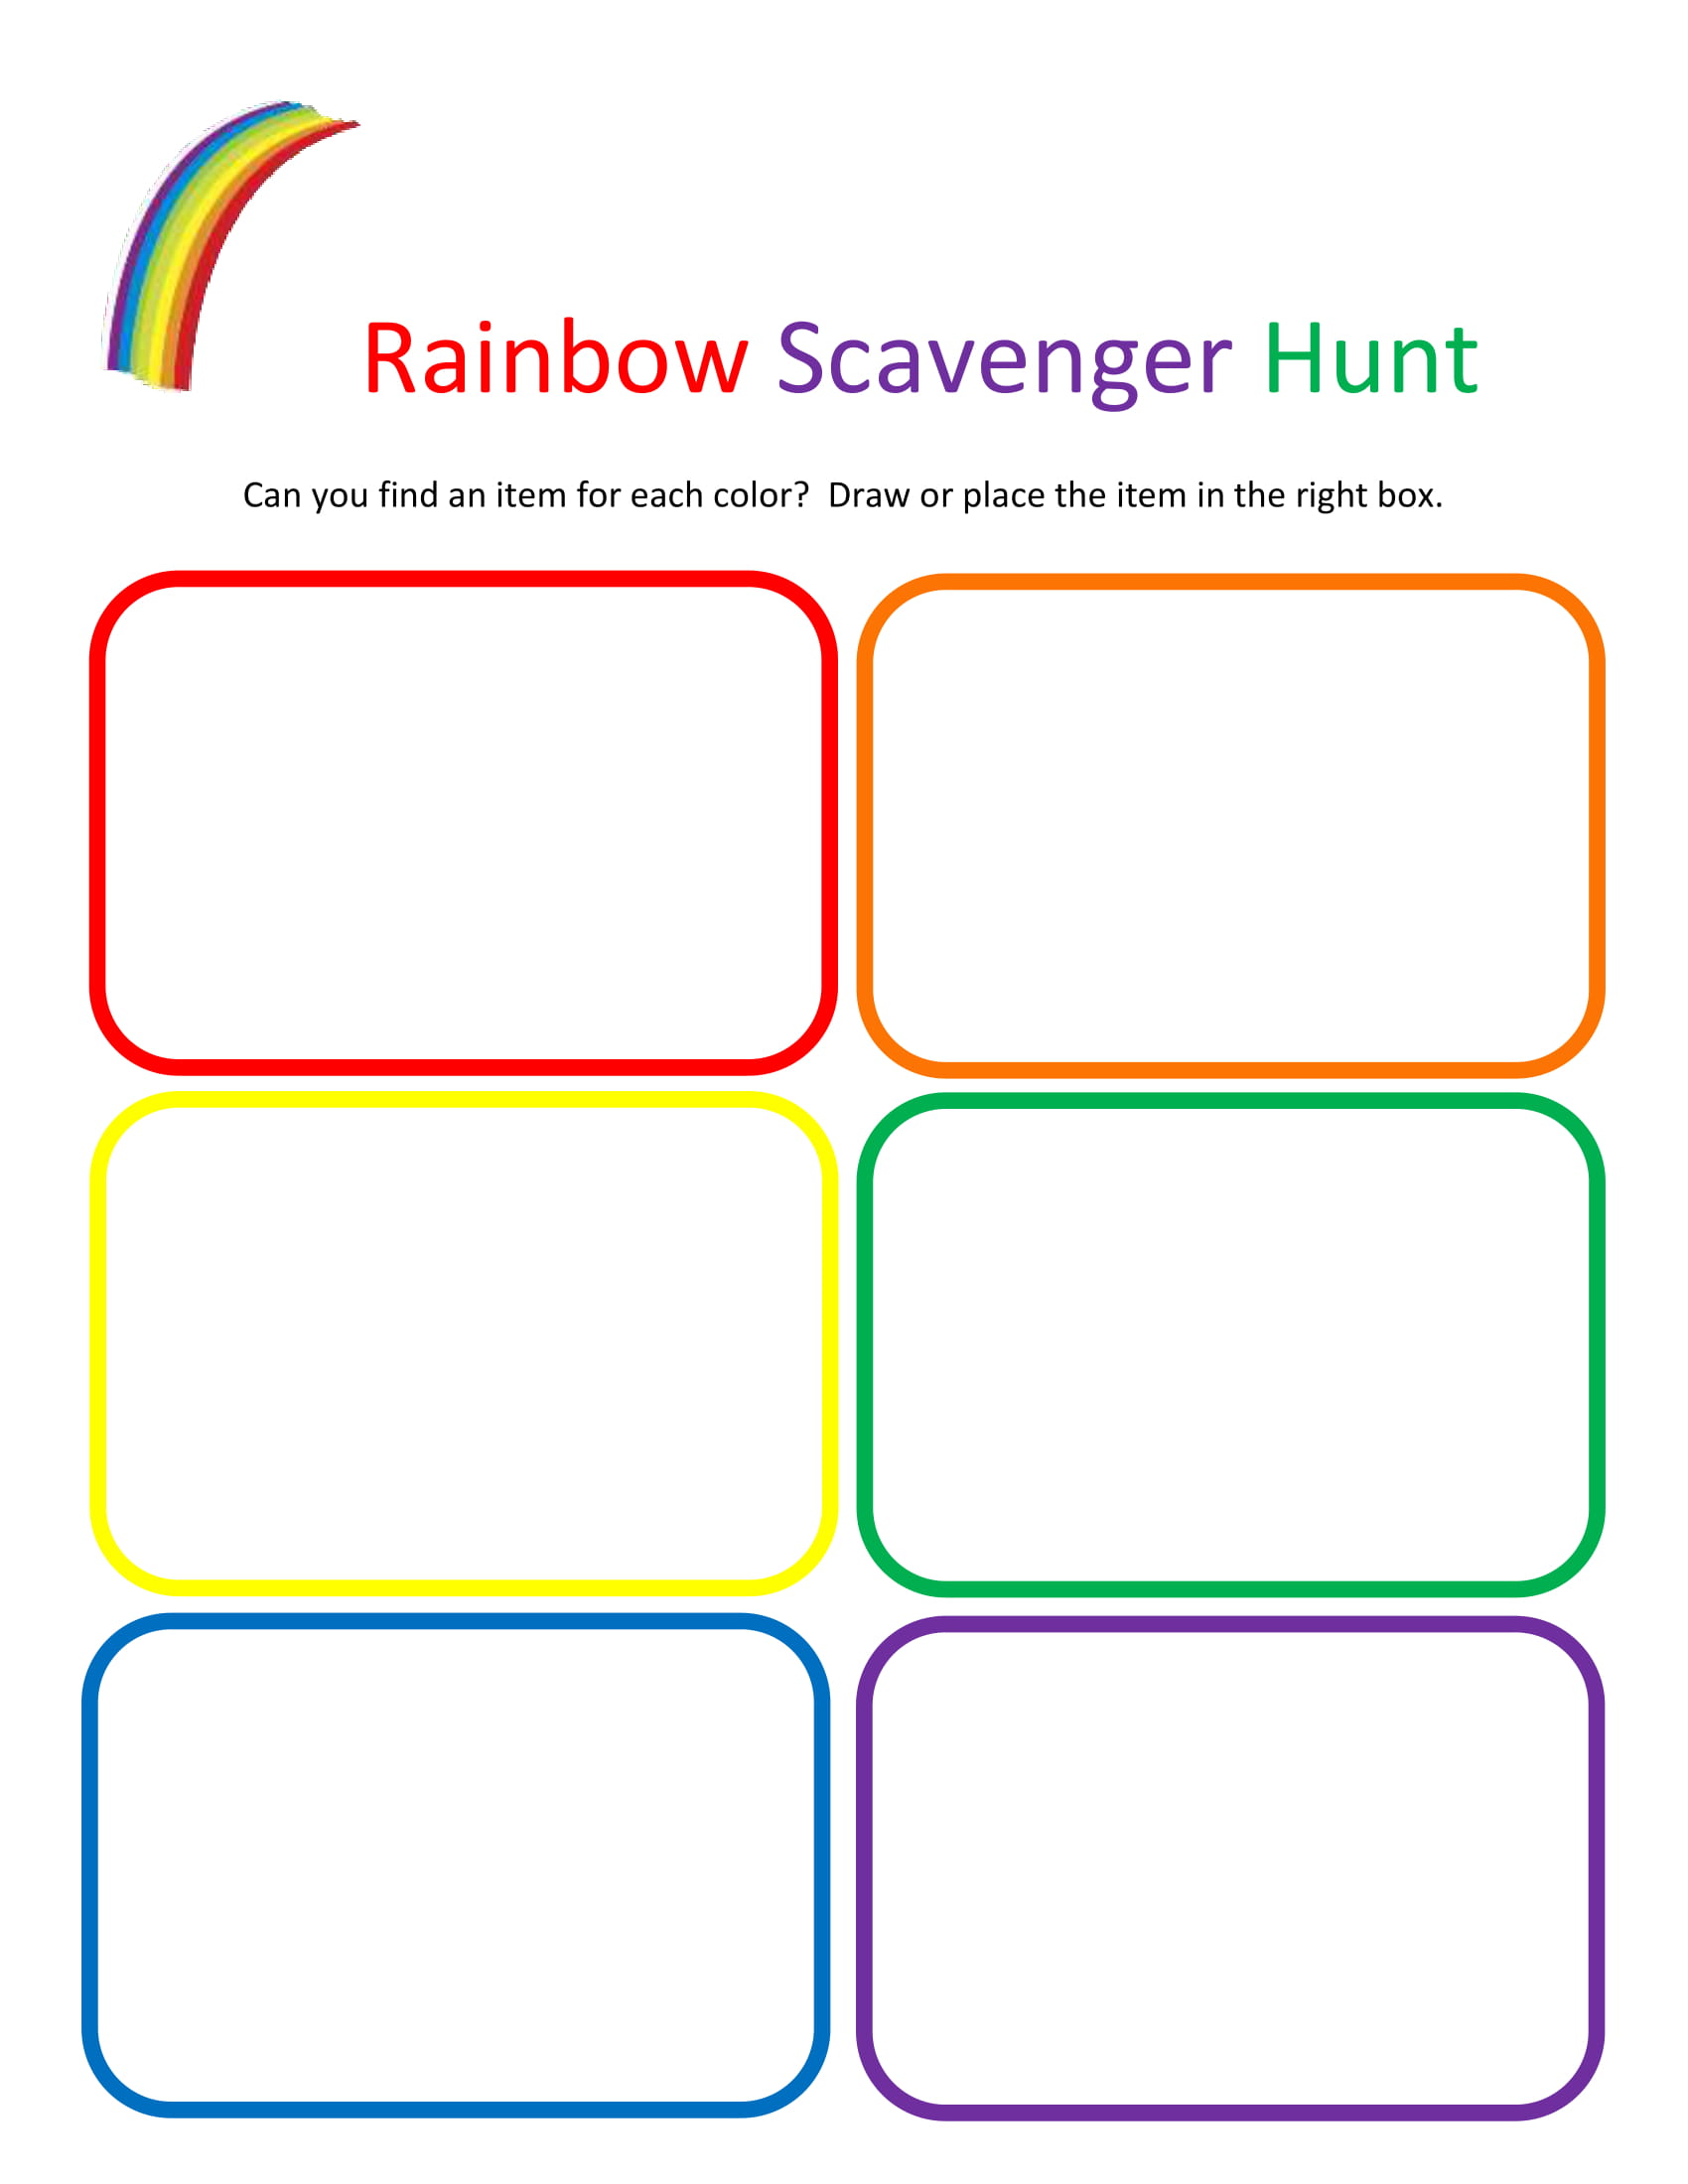 Rainbow Scavenger Hunt.